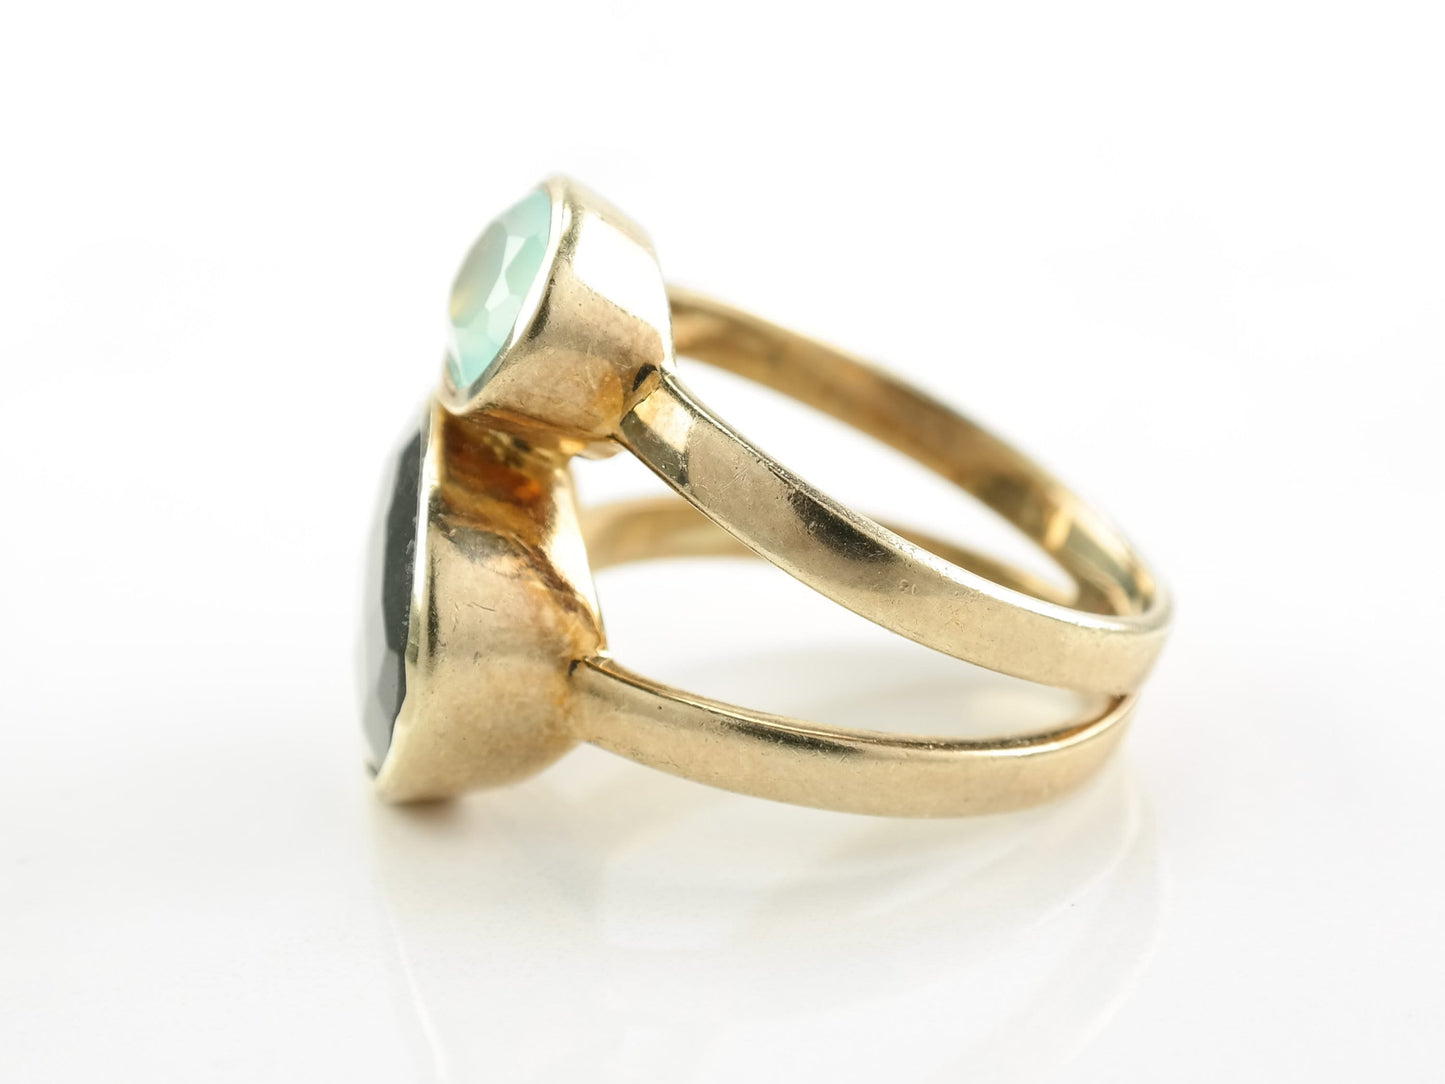 Vintage Sterling Silver Ring Labradorite Chrysoprase Gold Plated Size 9 1/4